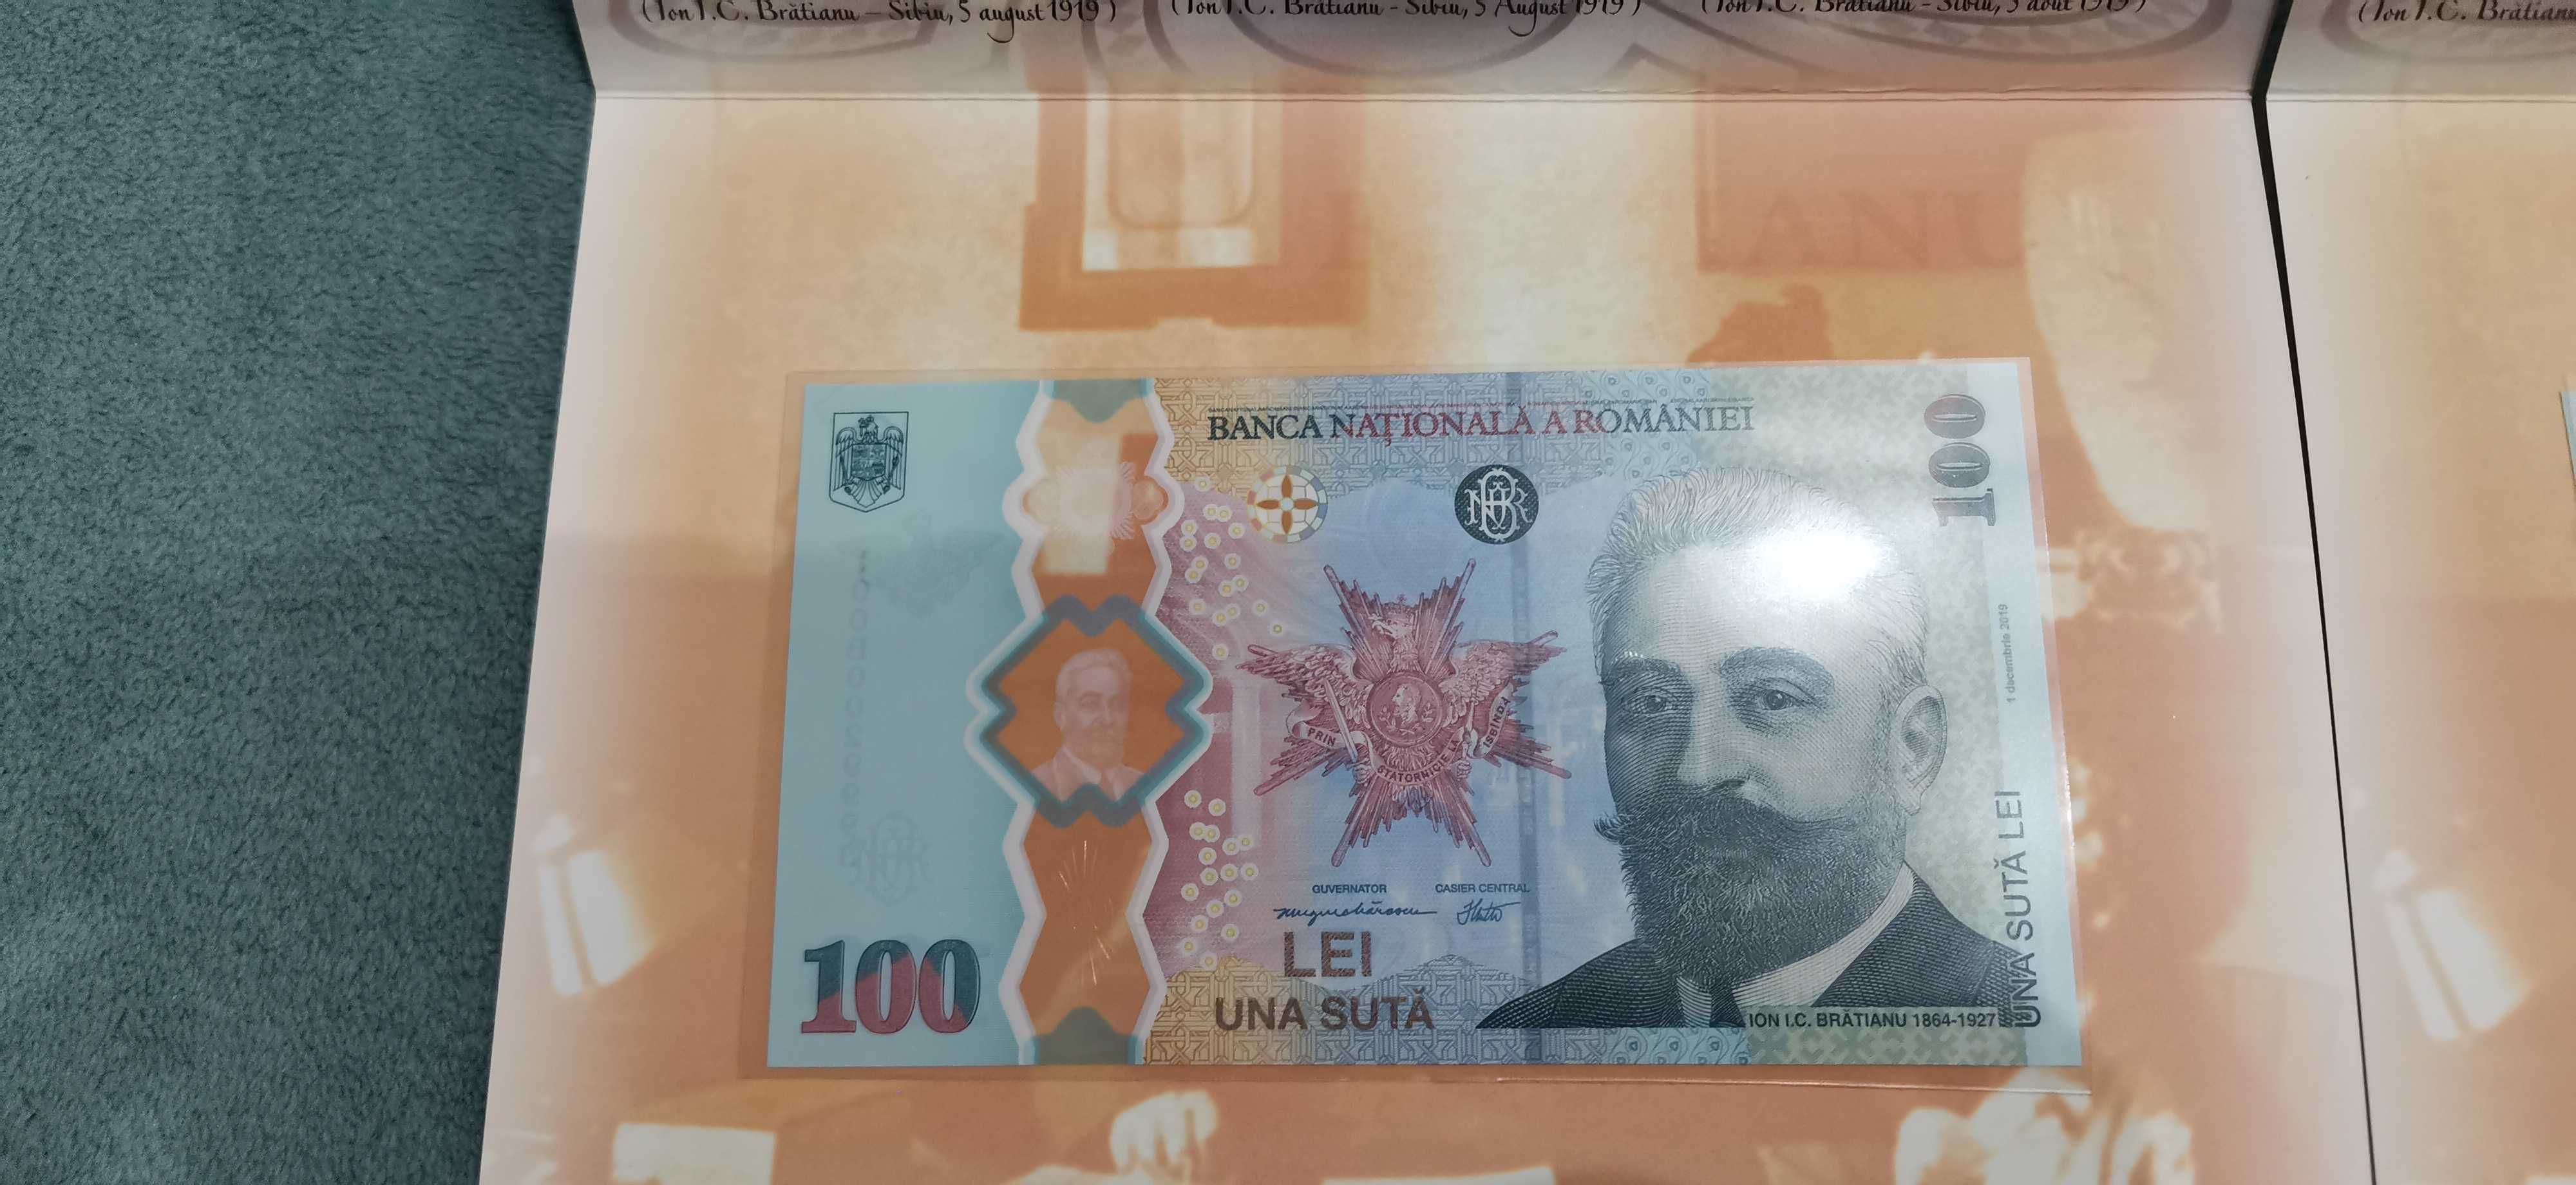 Bancnota 100 lei - 2019 (Bratianu)